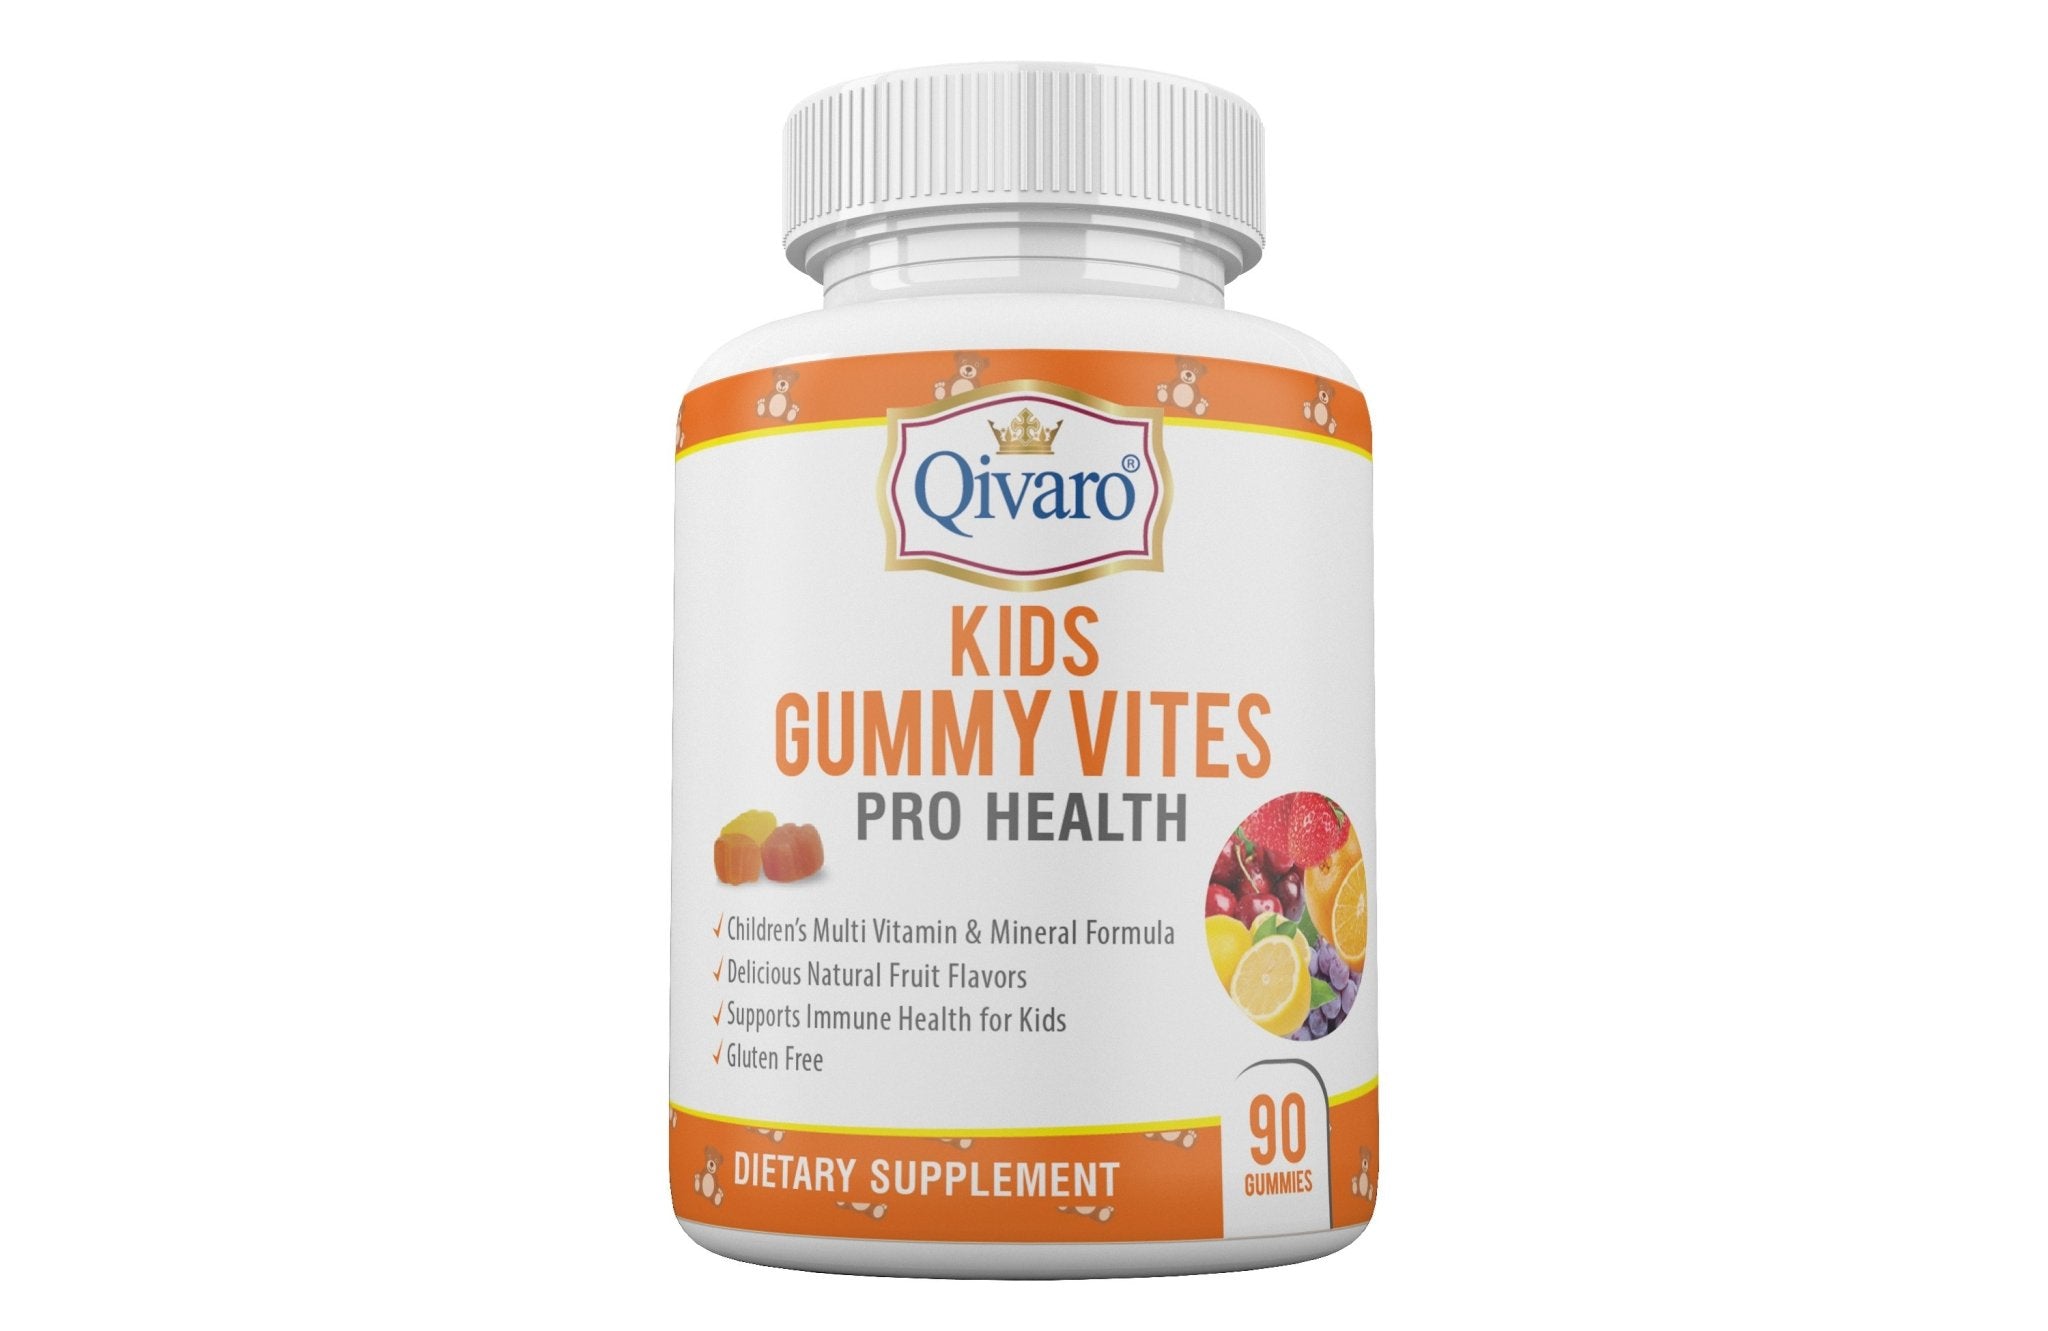 QKG01 - KIDS GUMMY VITES PRO HEALTH By Qivaro - 90 GUMMIES - Qivaro USA